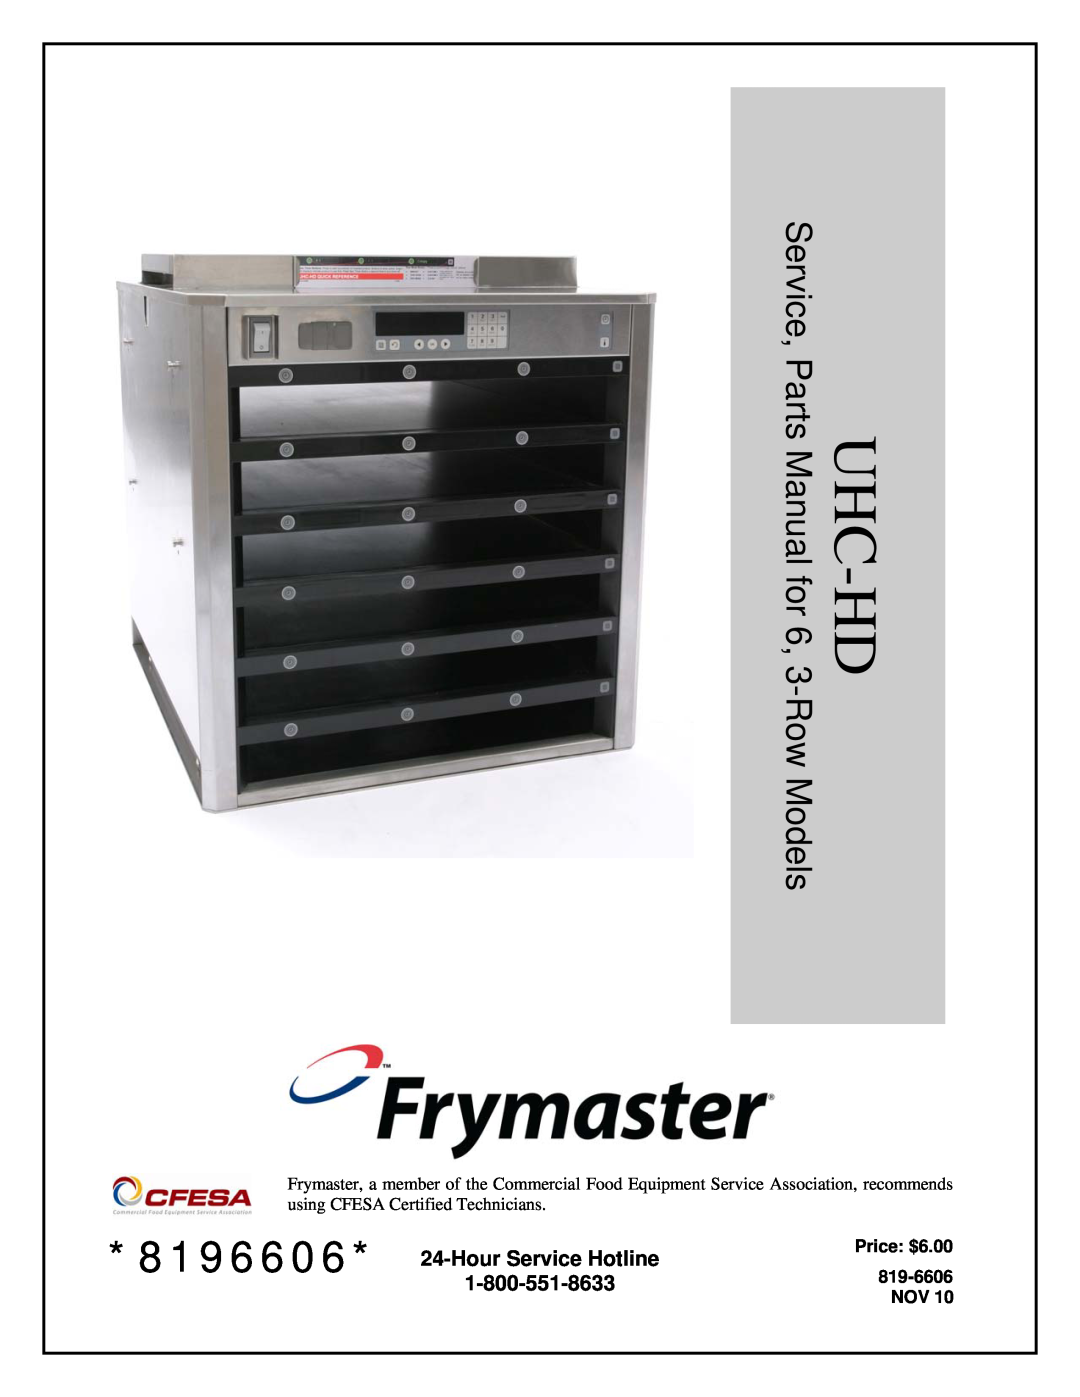 Frymaster manual 8196606* 24-HourService Hotline, 1-800-551-8633819-6606 NOV, Service, Parts Manual, for 6, RowModels 